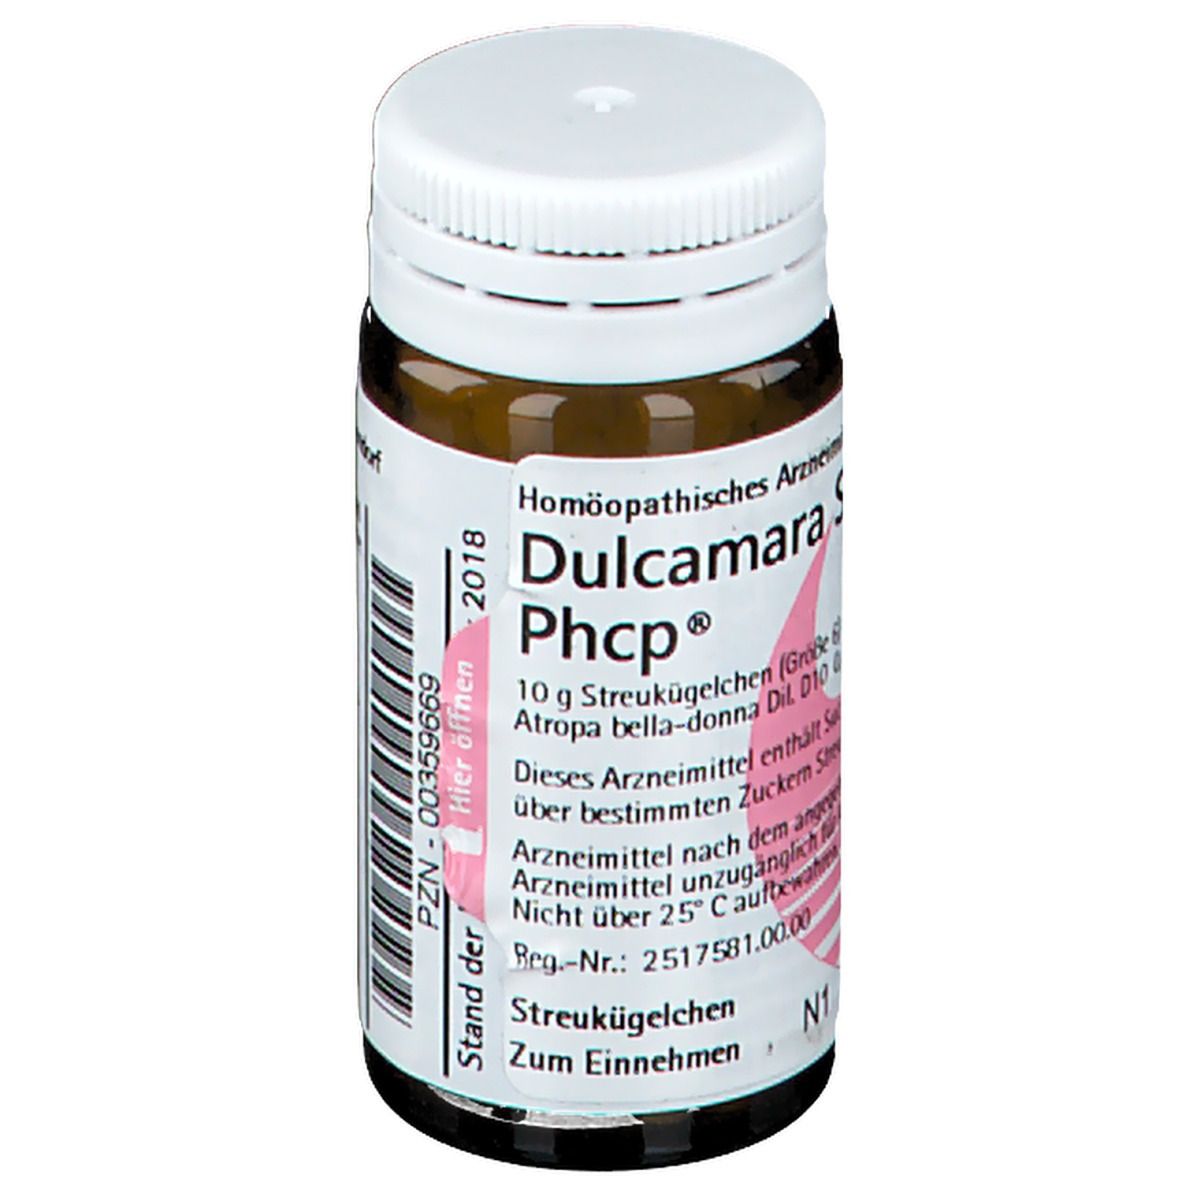 Dulcamara S Phcp®